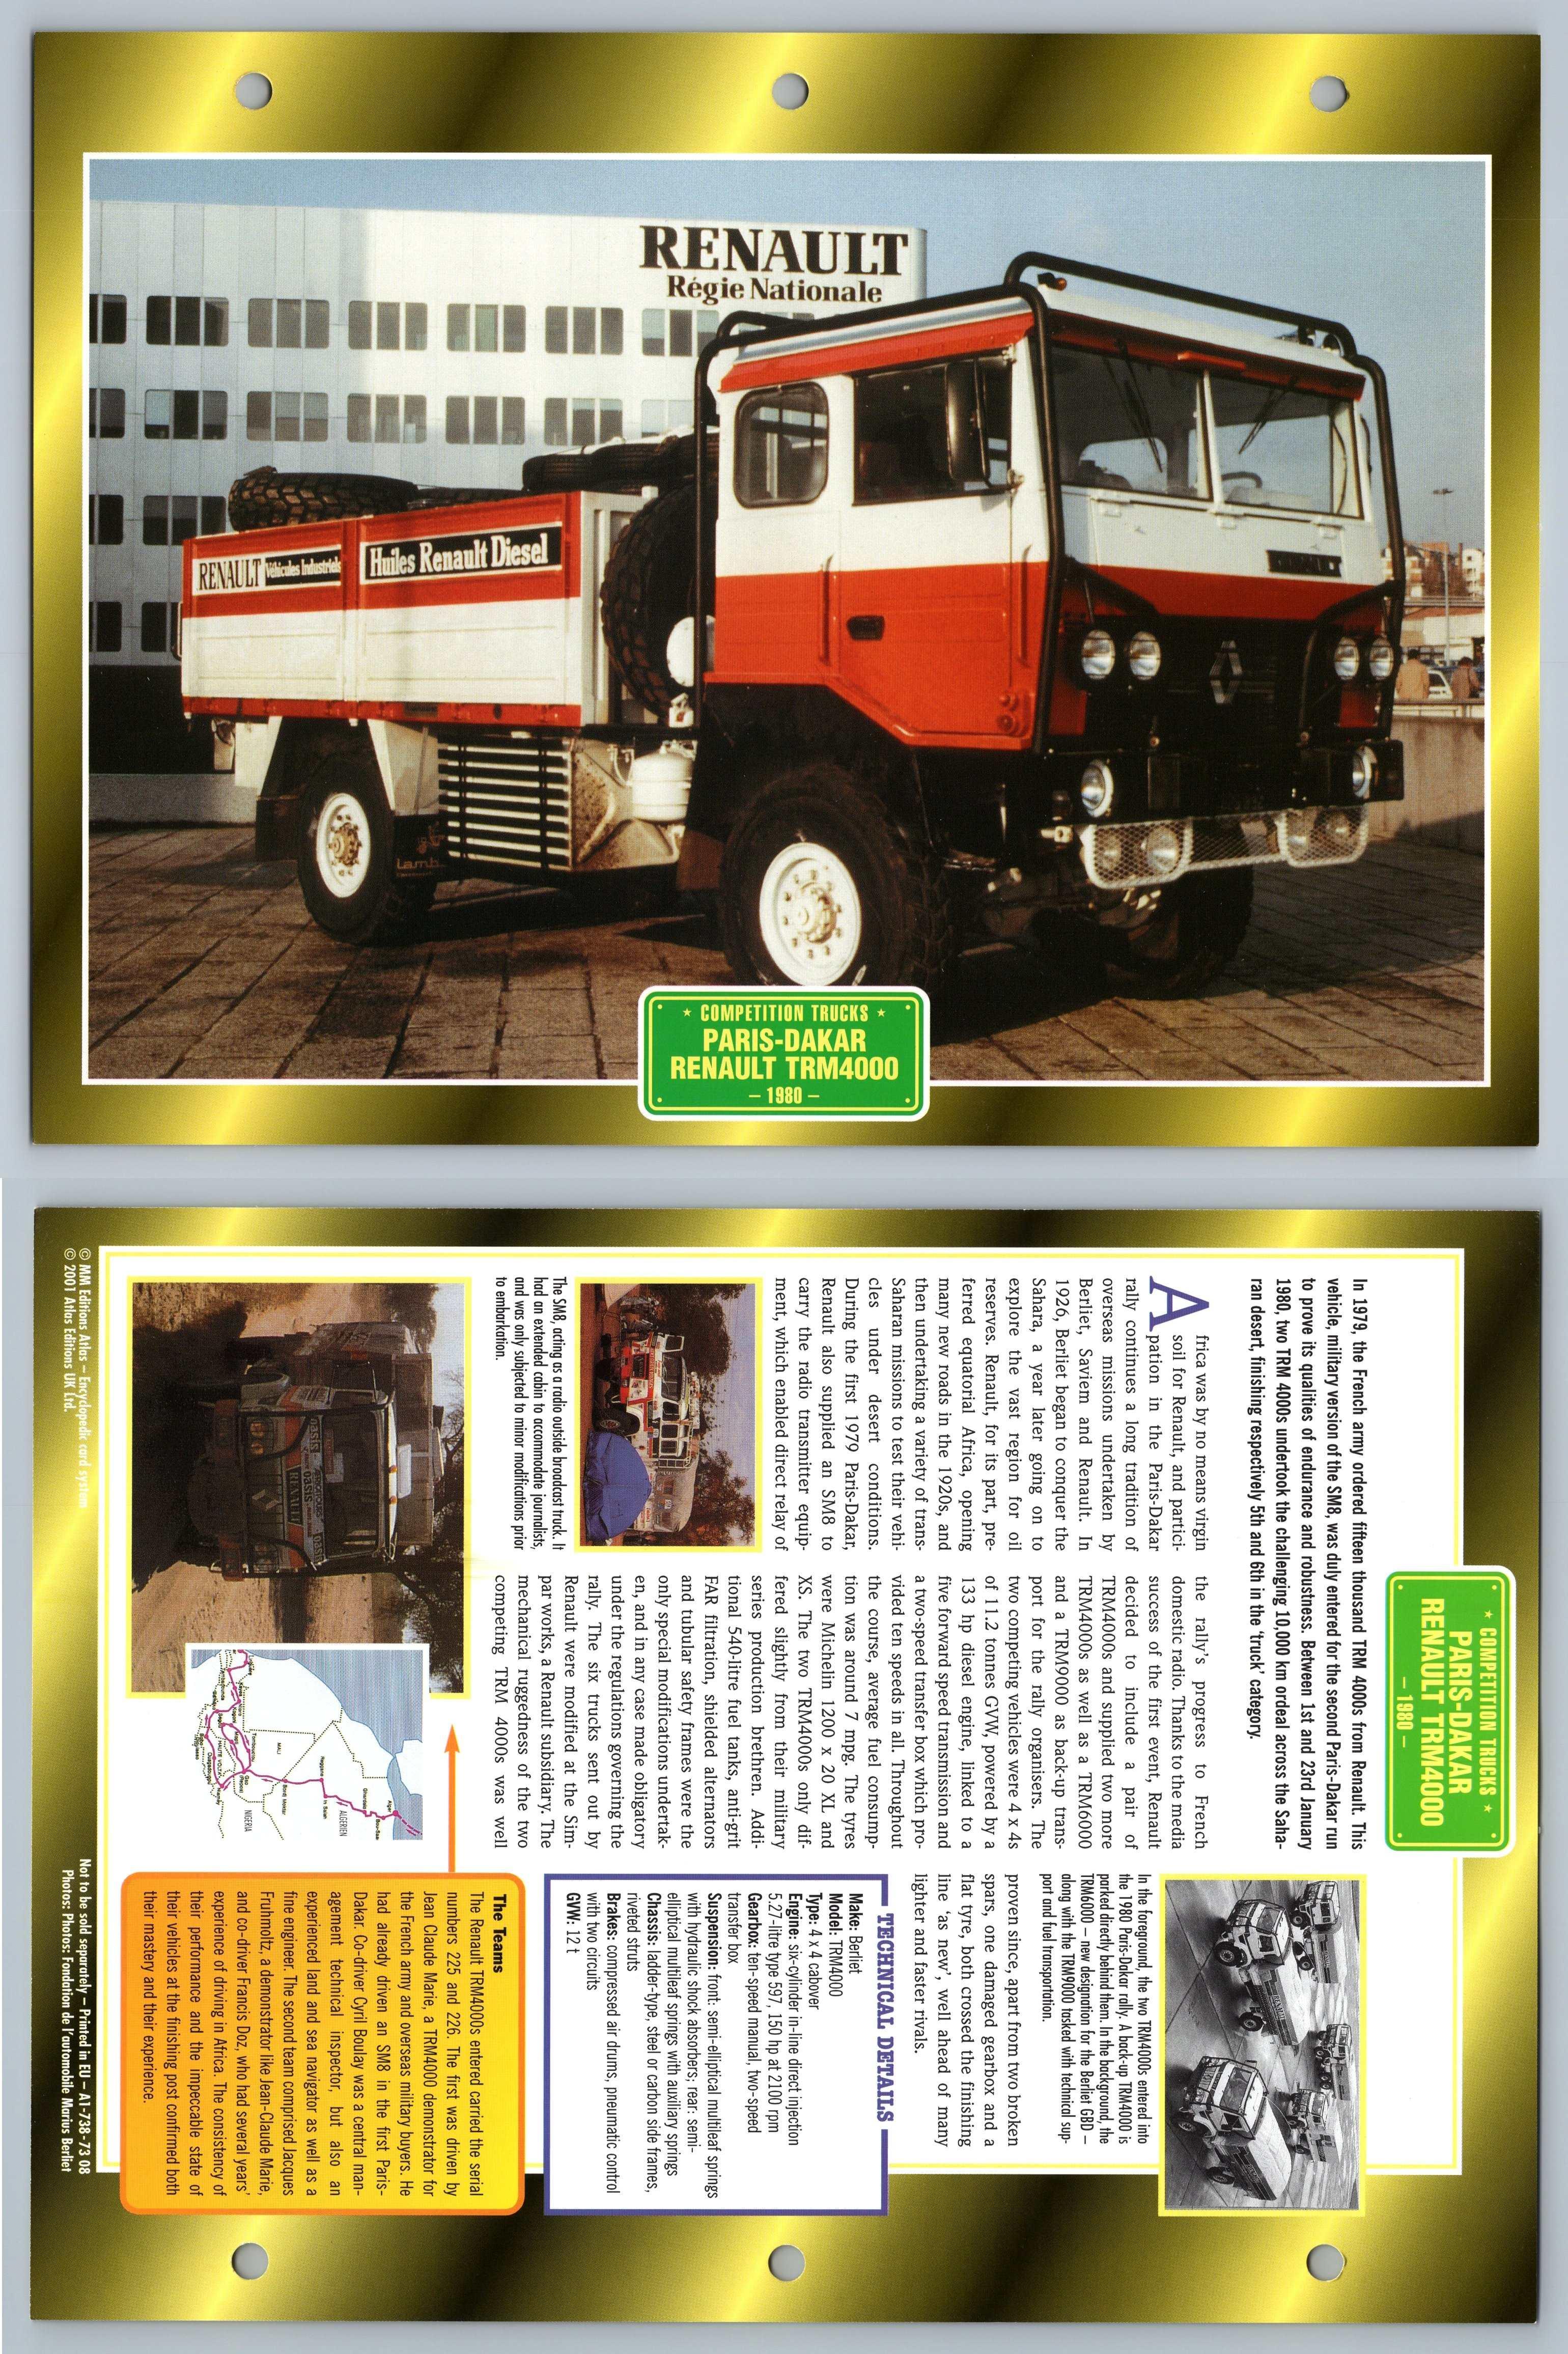 Paris-Dakar Renault TRM4000 - 1980 - Competition Trucks Atlas Maxi Card